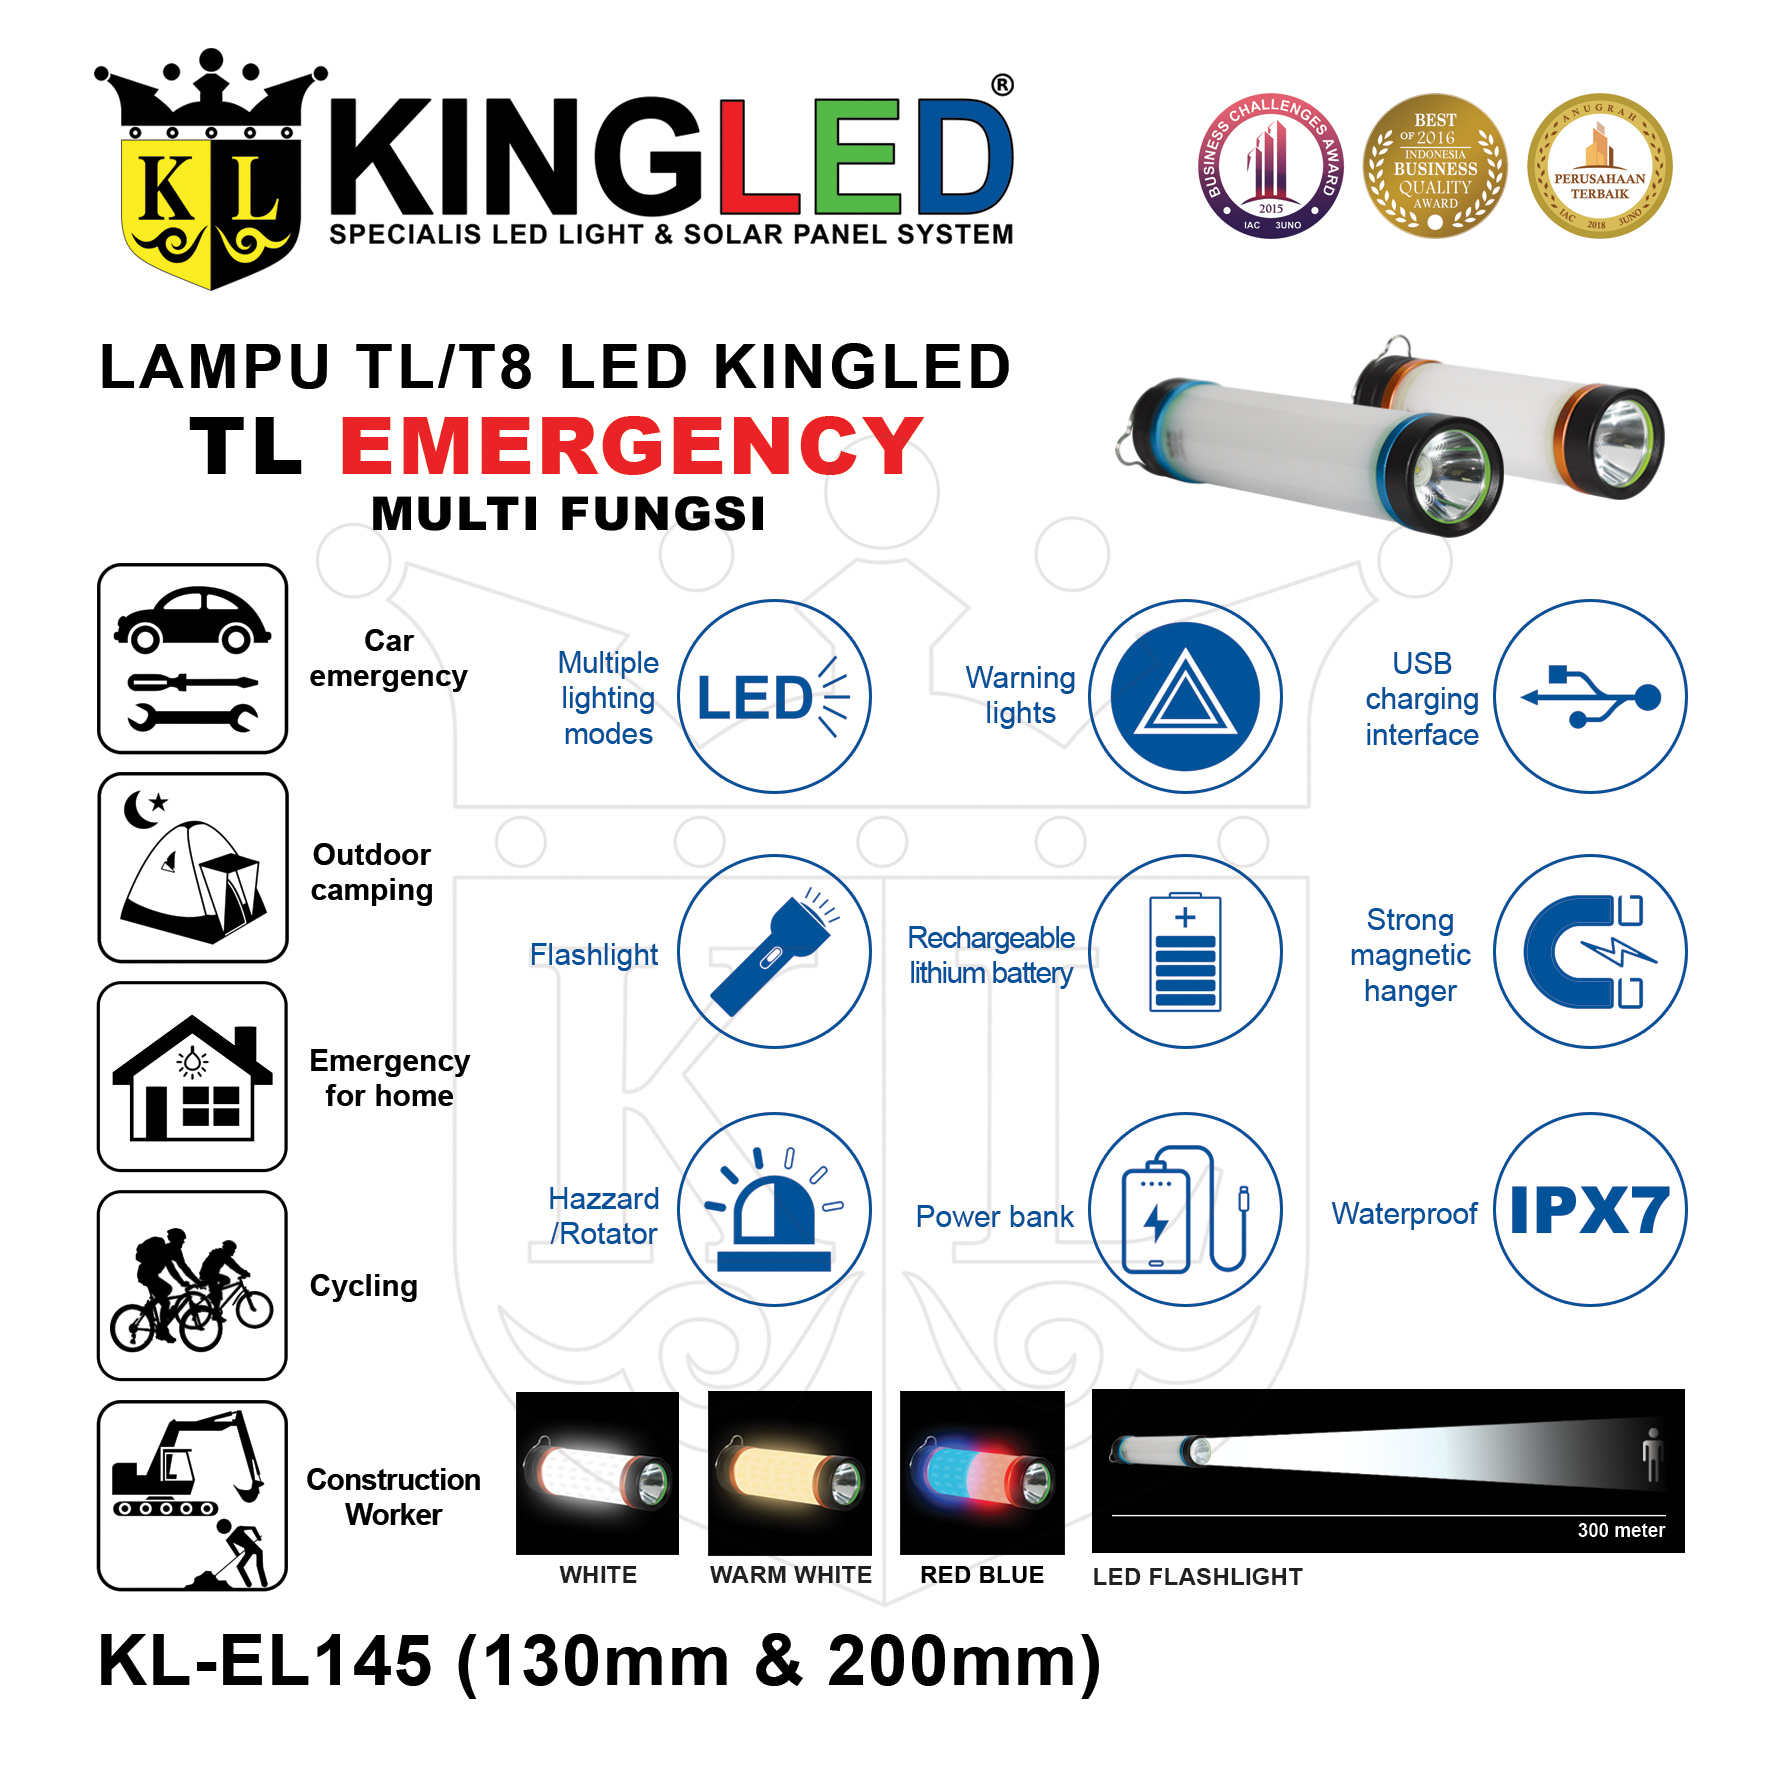 Lampu LED TL Emergency Multi Fungsi 5 Watt Lantern Torch Outdoor Flashlight Senter